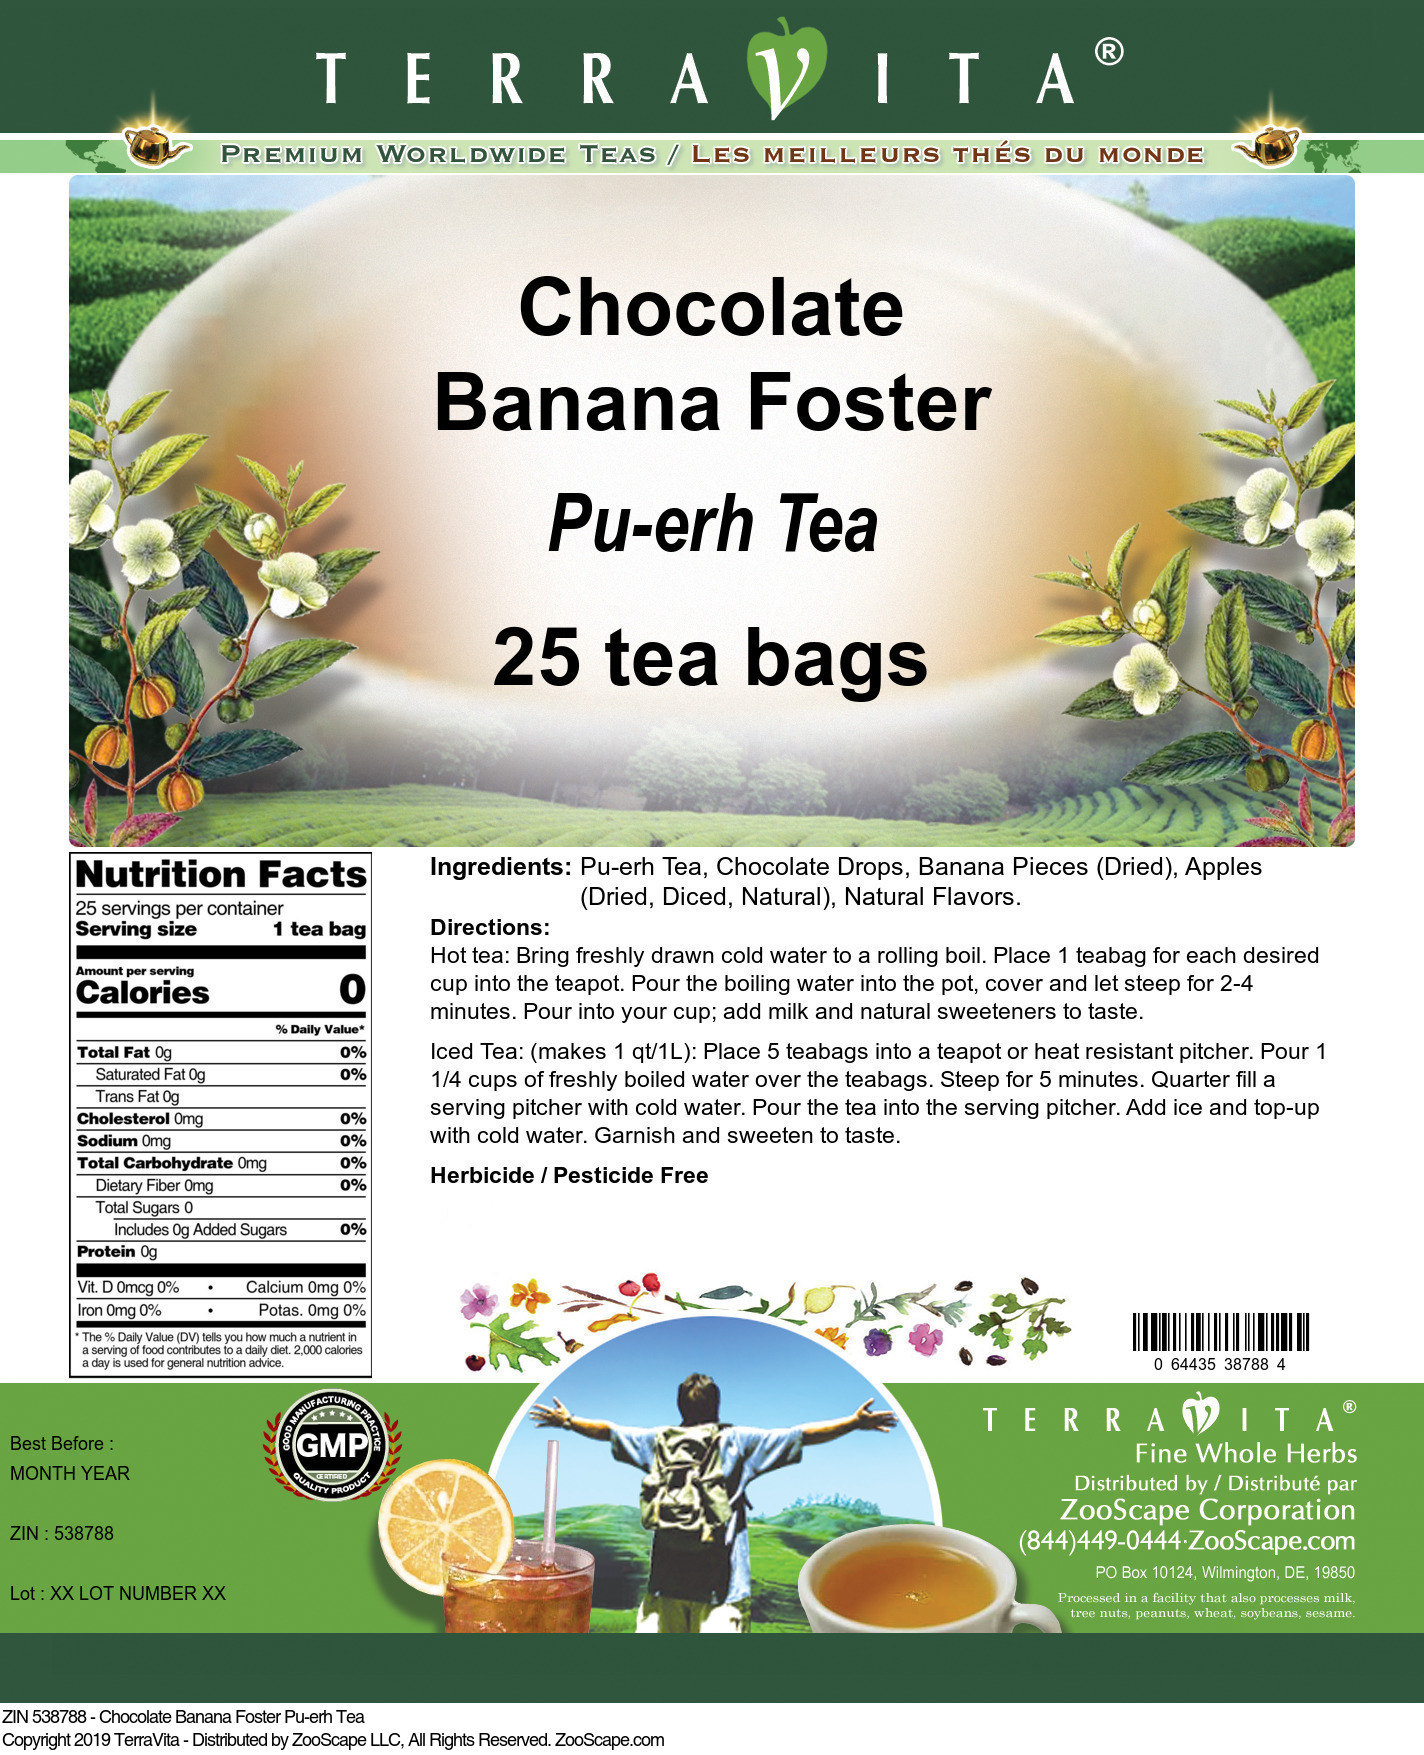 Chocolate Banana Foster Pu-erh Tea - Label